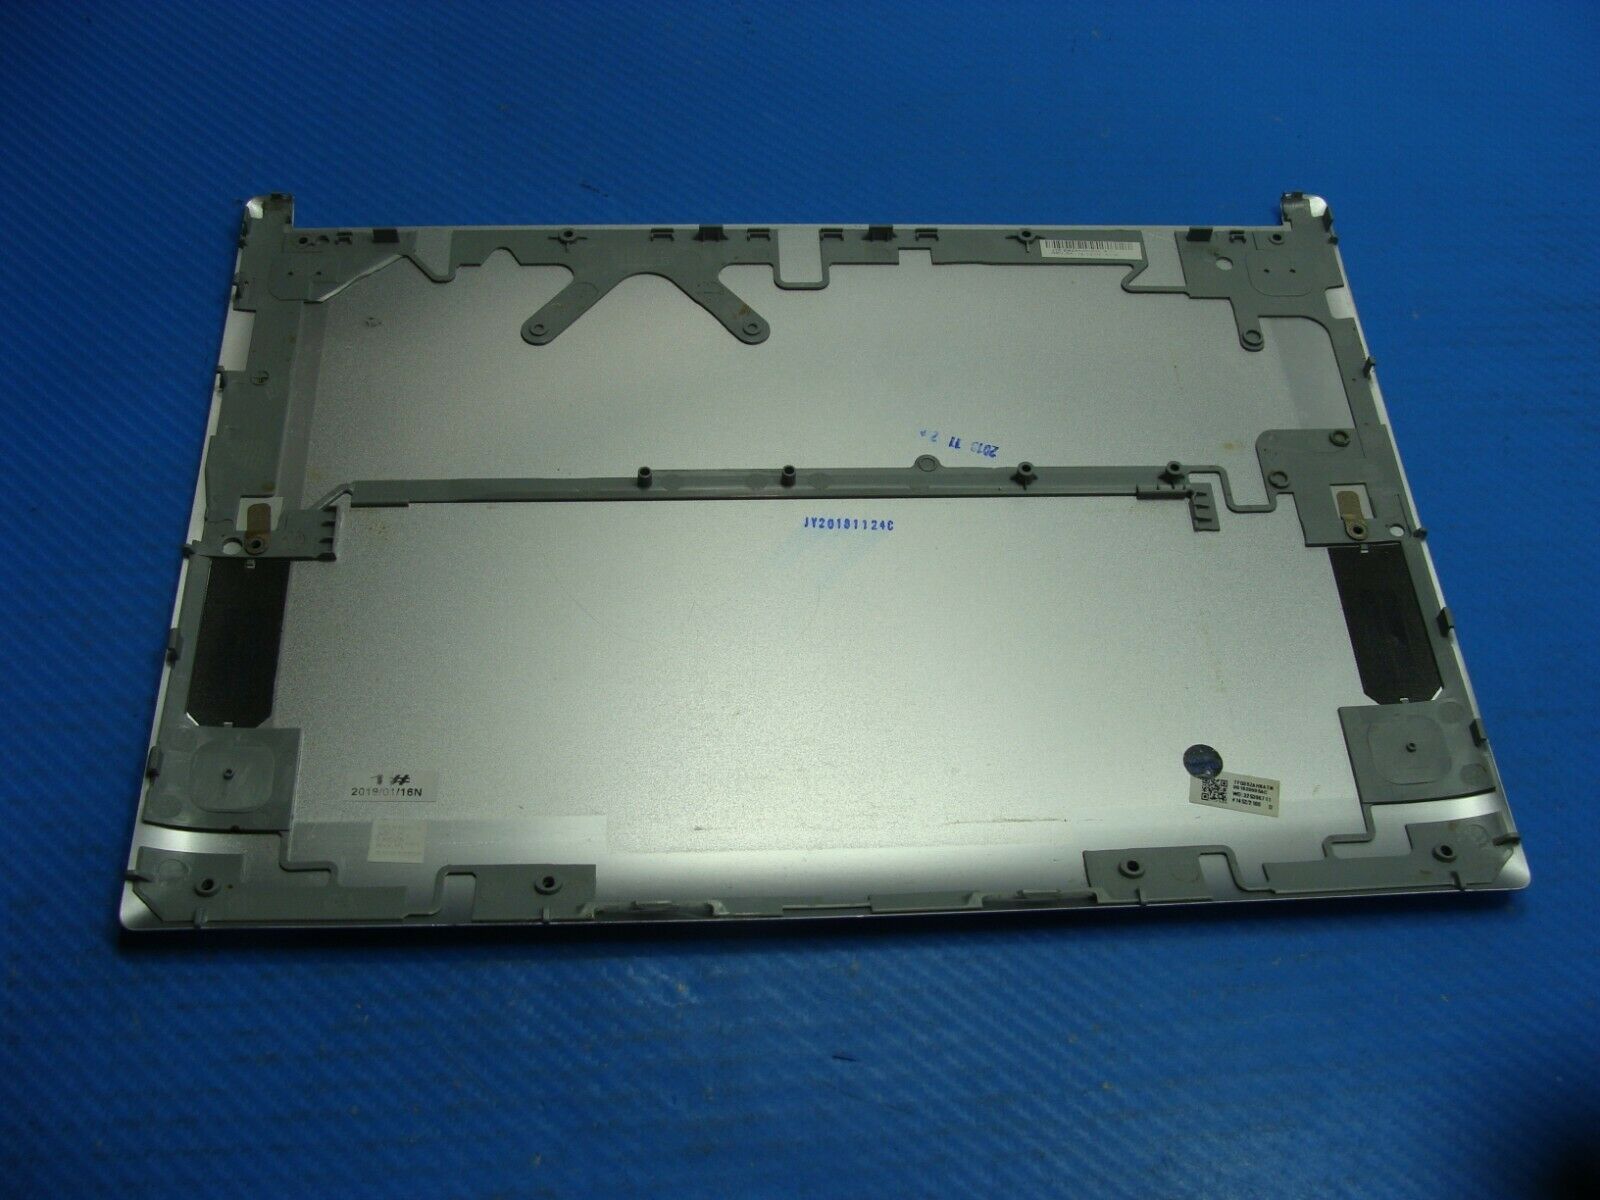 Acer Chromebook CB514-1HT-P2D1 14